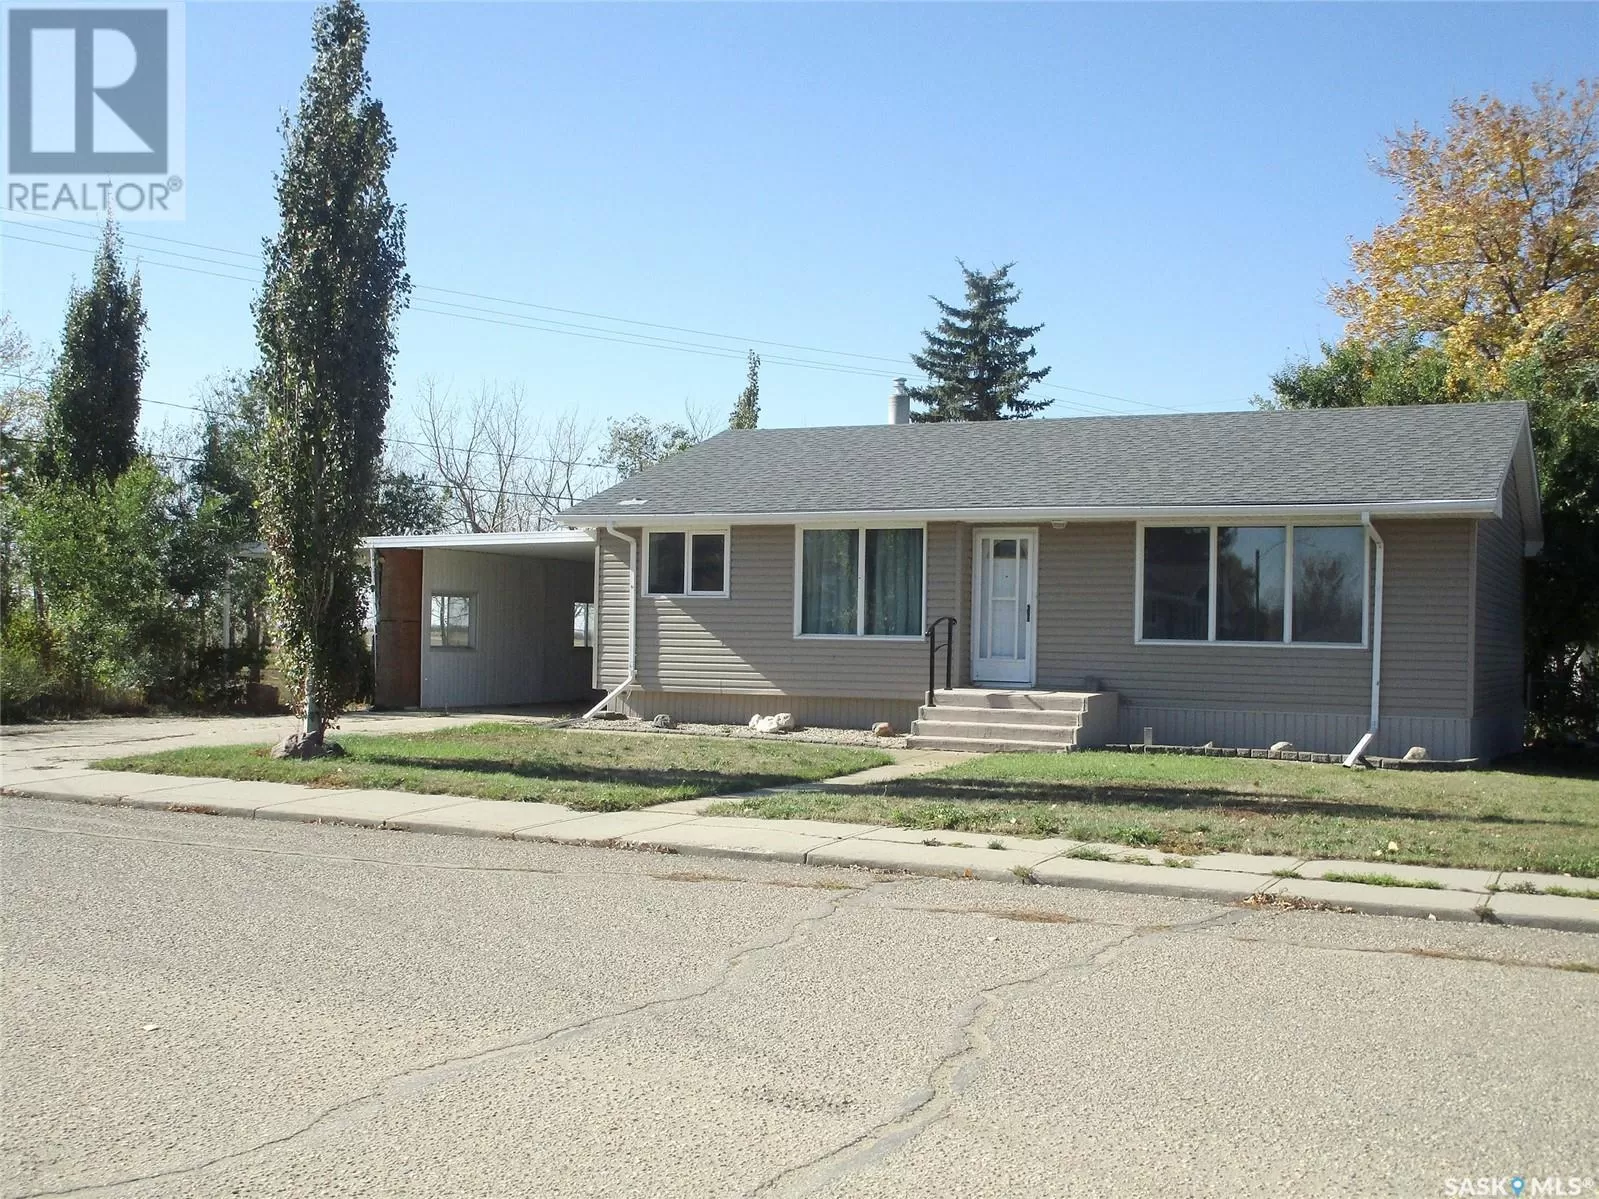 House for rent: 112 Bell Road, Assiniboia, Saskatchewan S0H 0B0